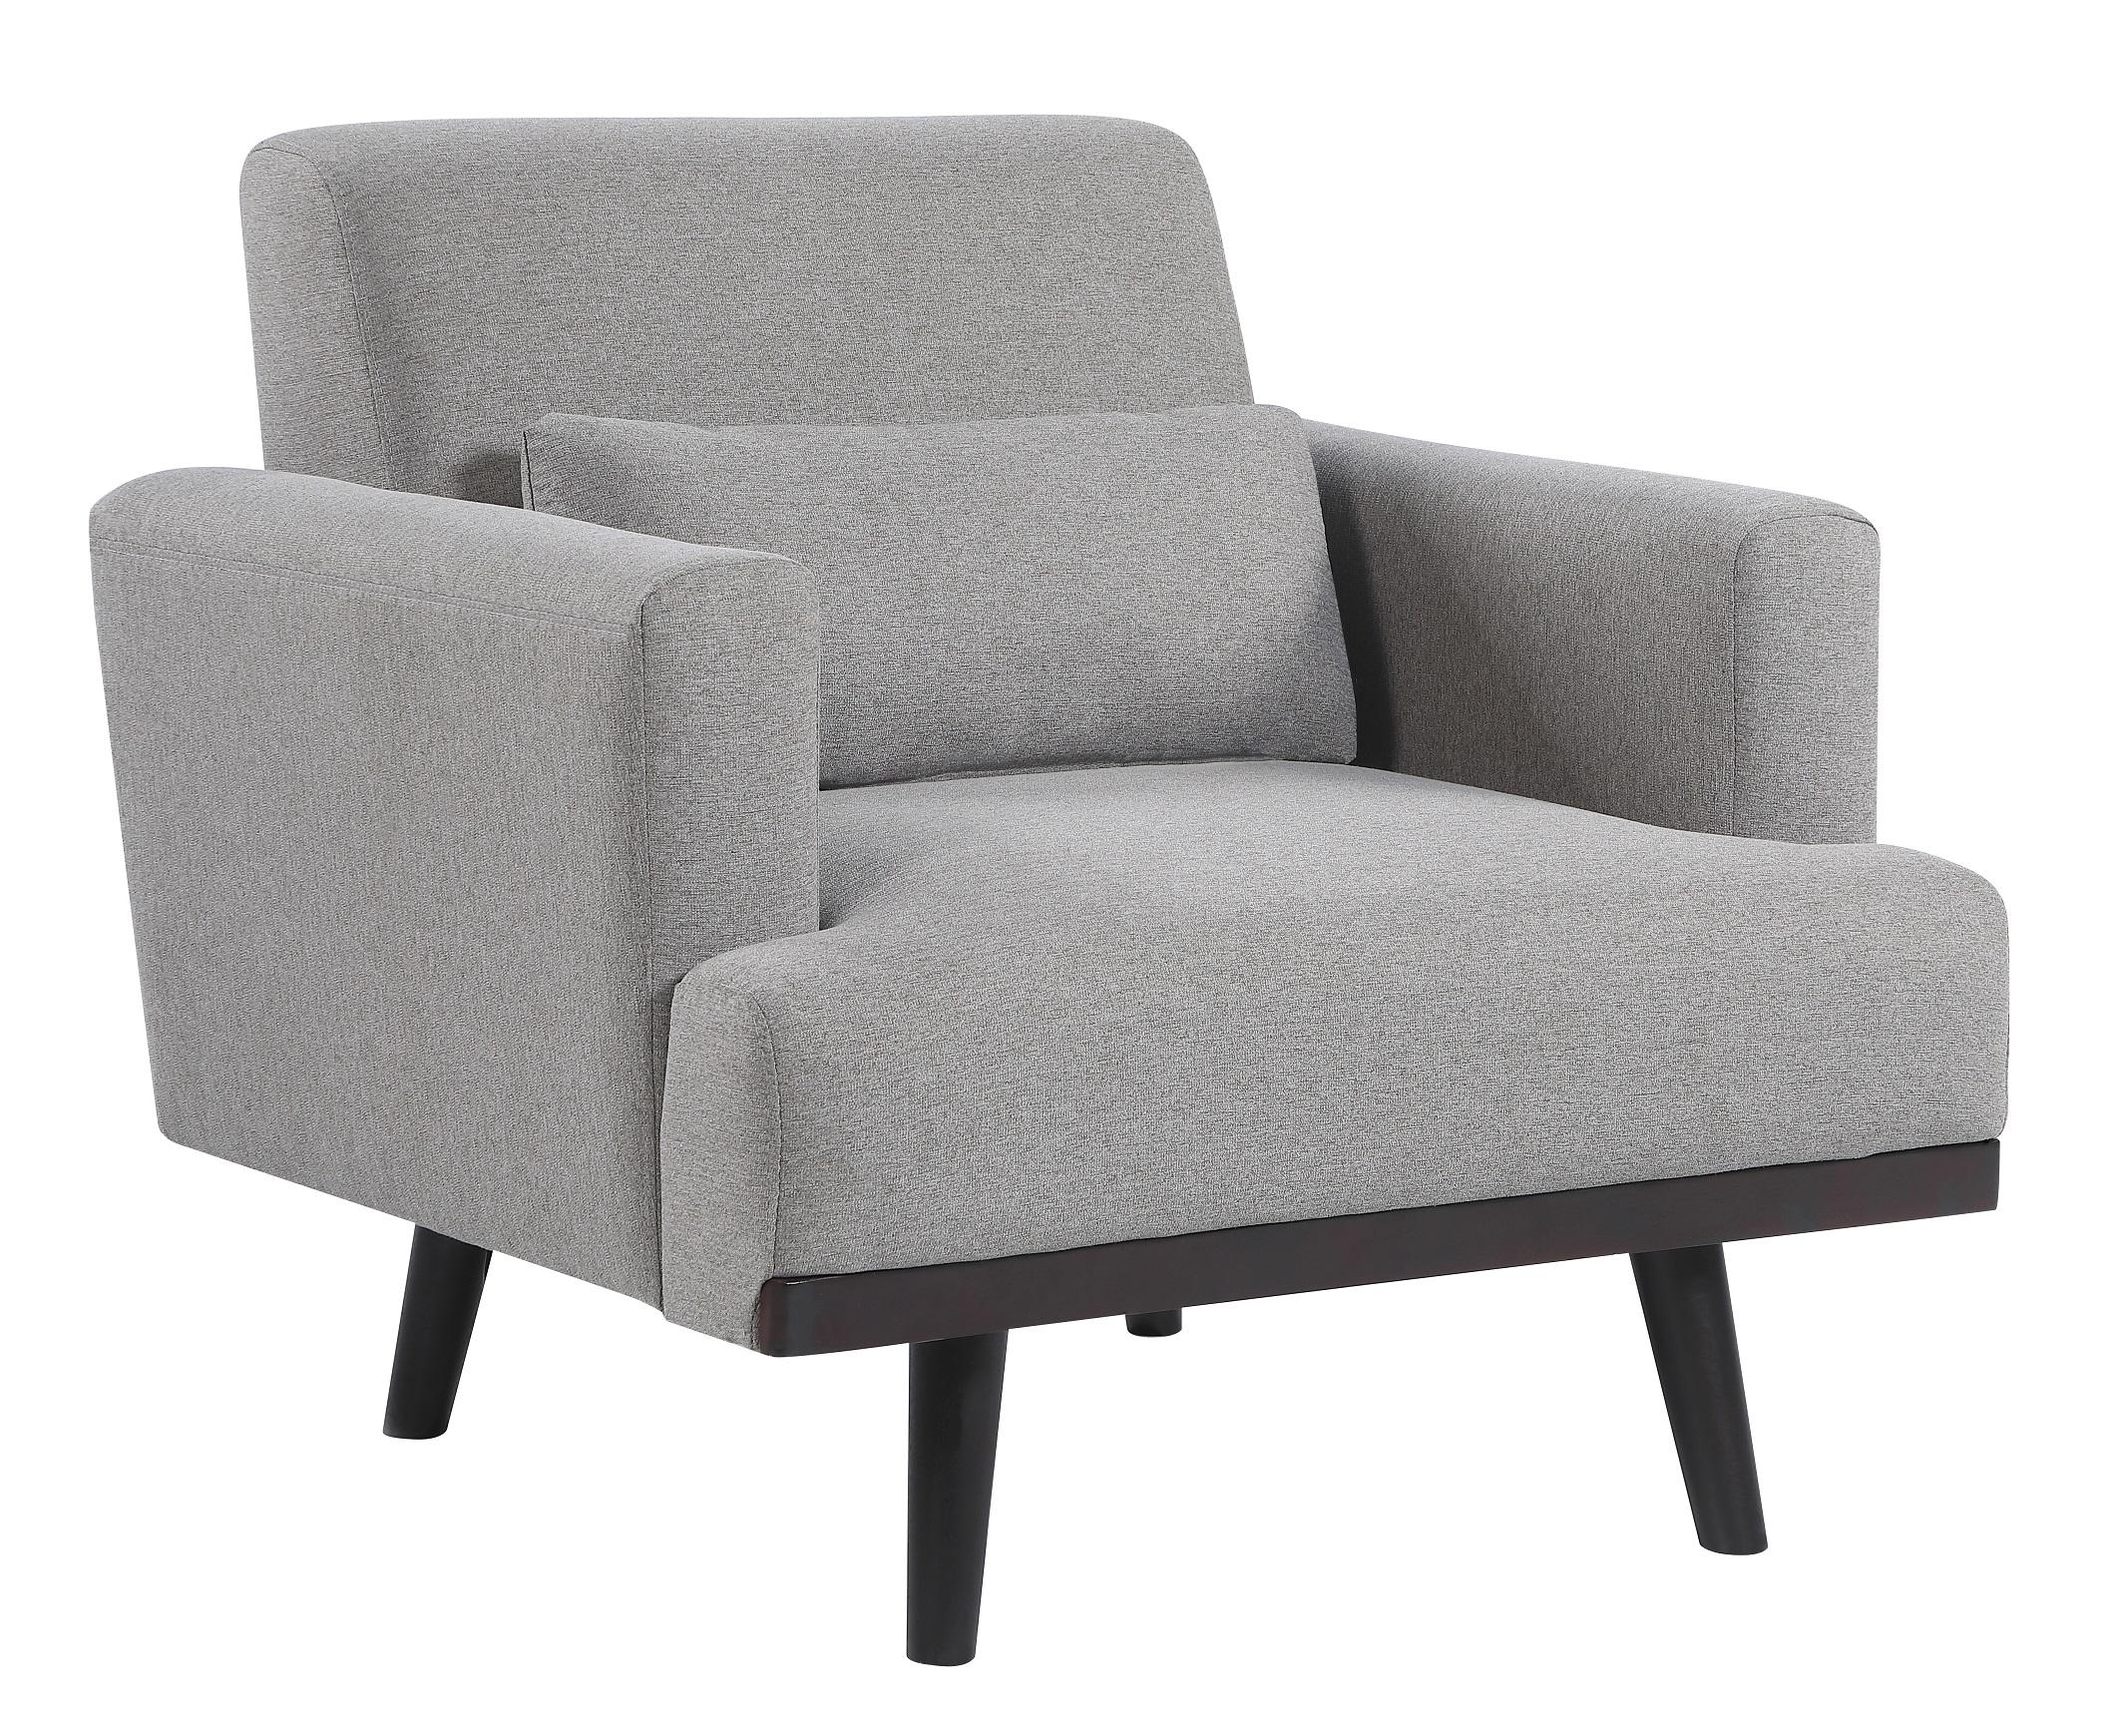 

    
Contemporary Sharkskin Linen-like Upholstery Arm Chair Coaster 511123 Blake
